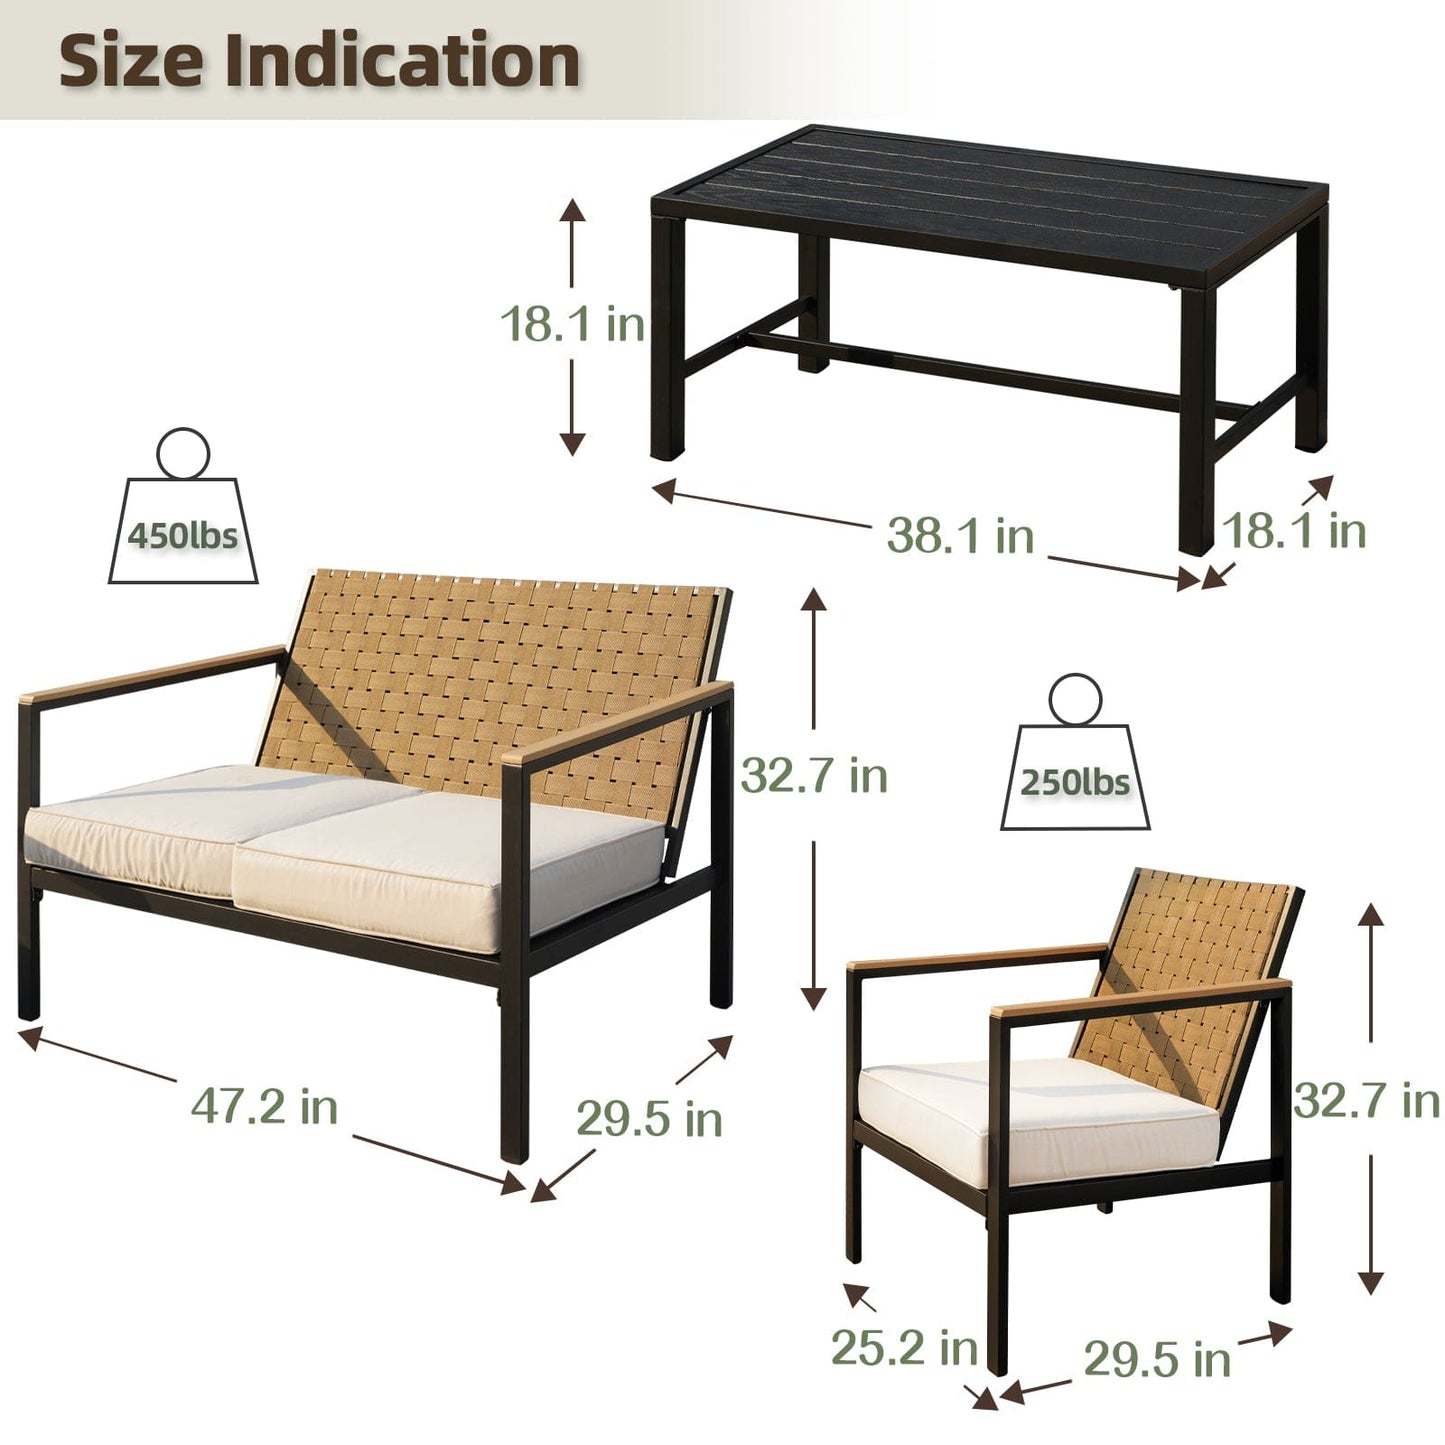 NADADI-Garden-dining-sofa-set-1a-size-indication